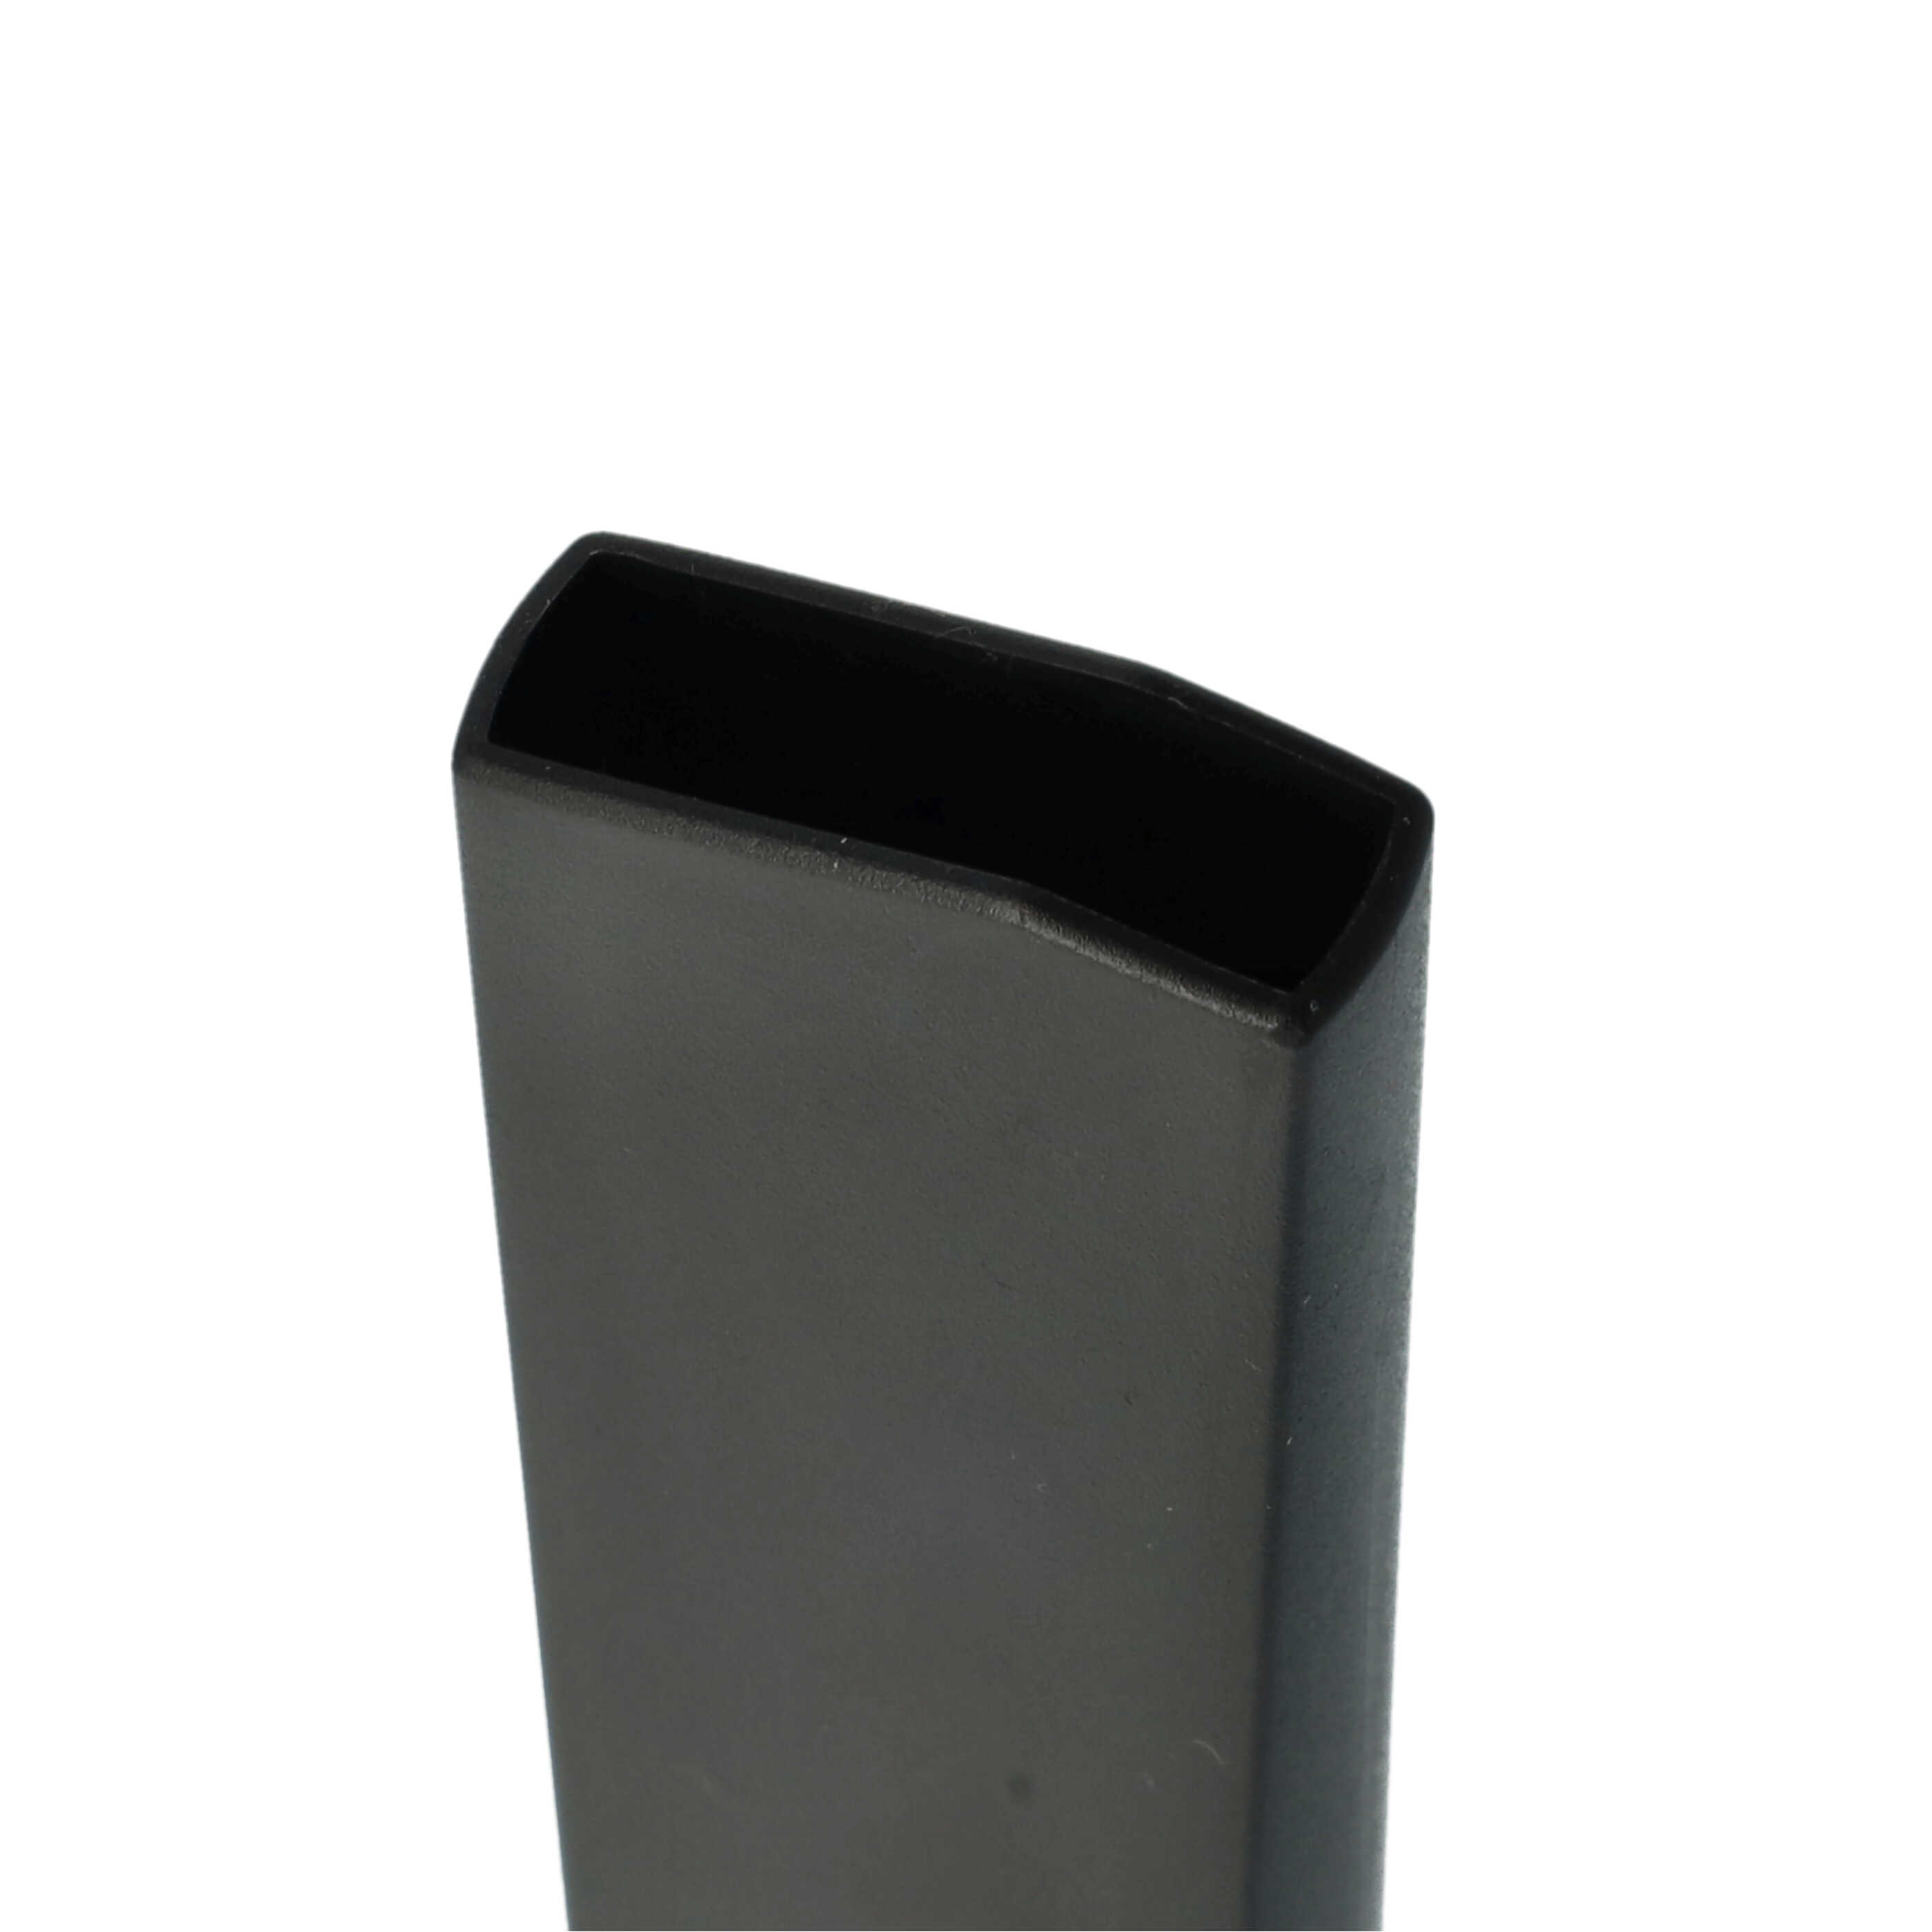 Vacuum Cleaner Crevice Nozzle 35 mm replaces Bosch/Siemens 00461406 - 21.5 cm